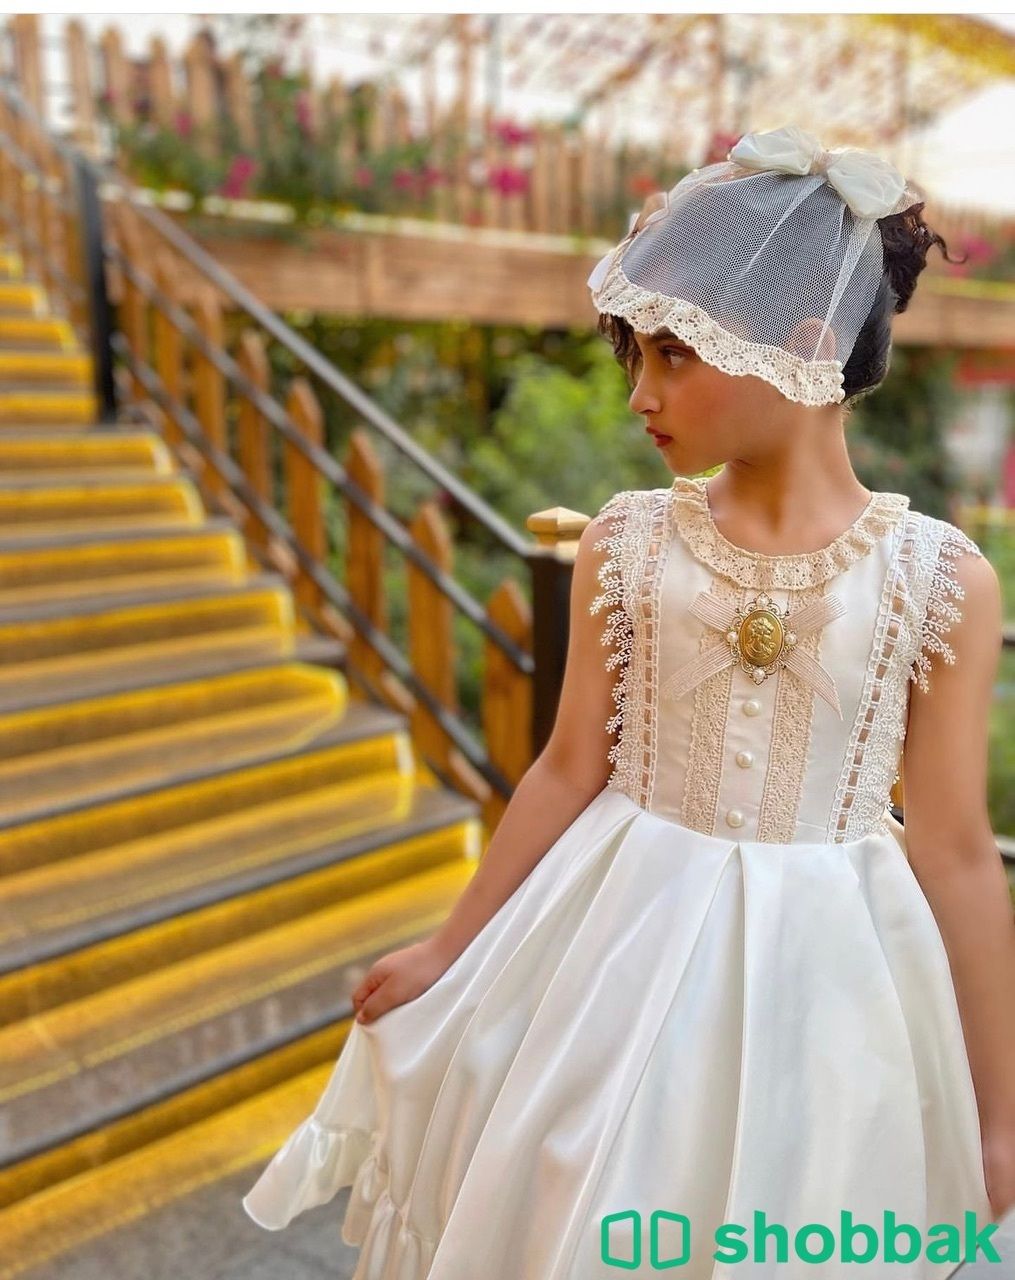 فستان طفله من مصممه Shobbak Saudi Arabia